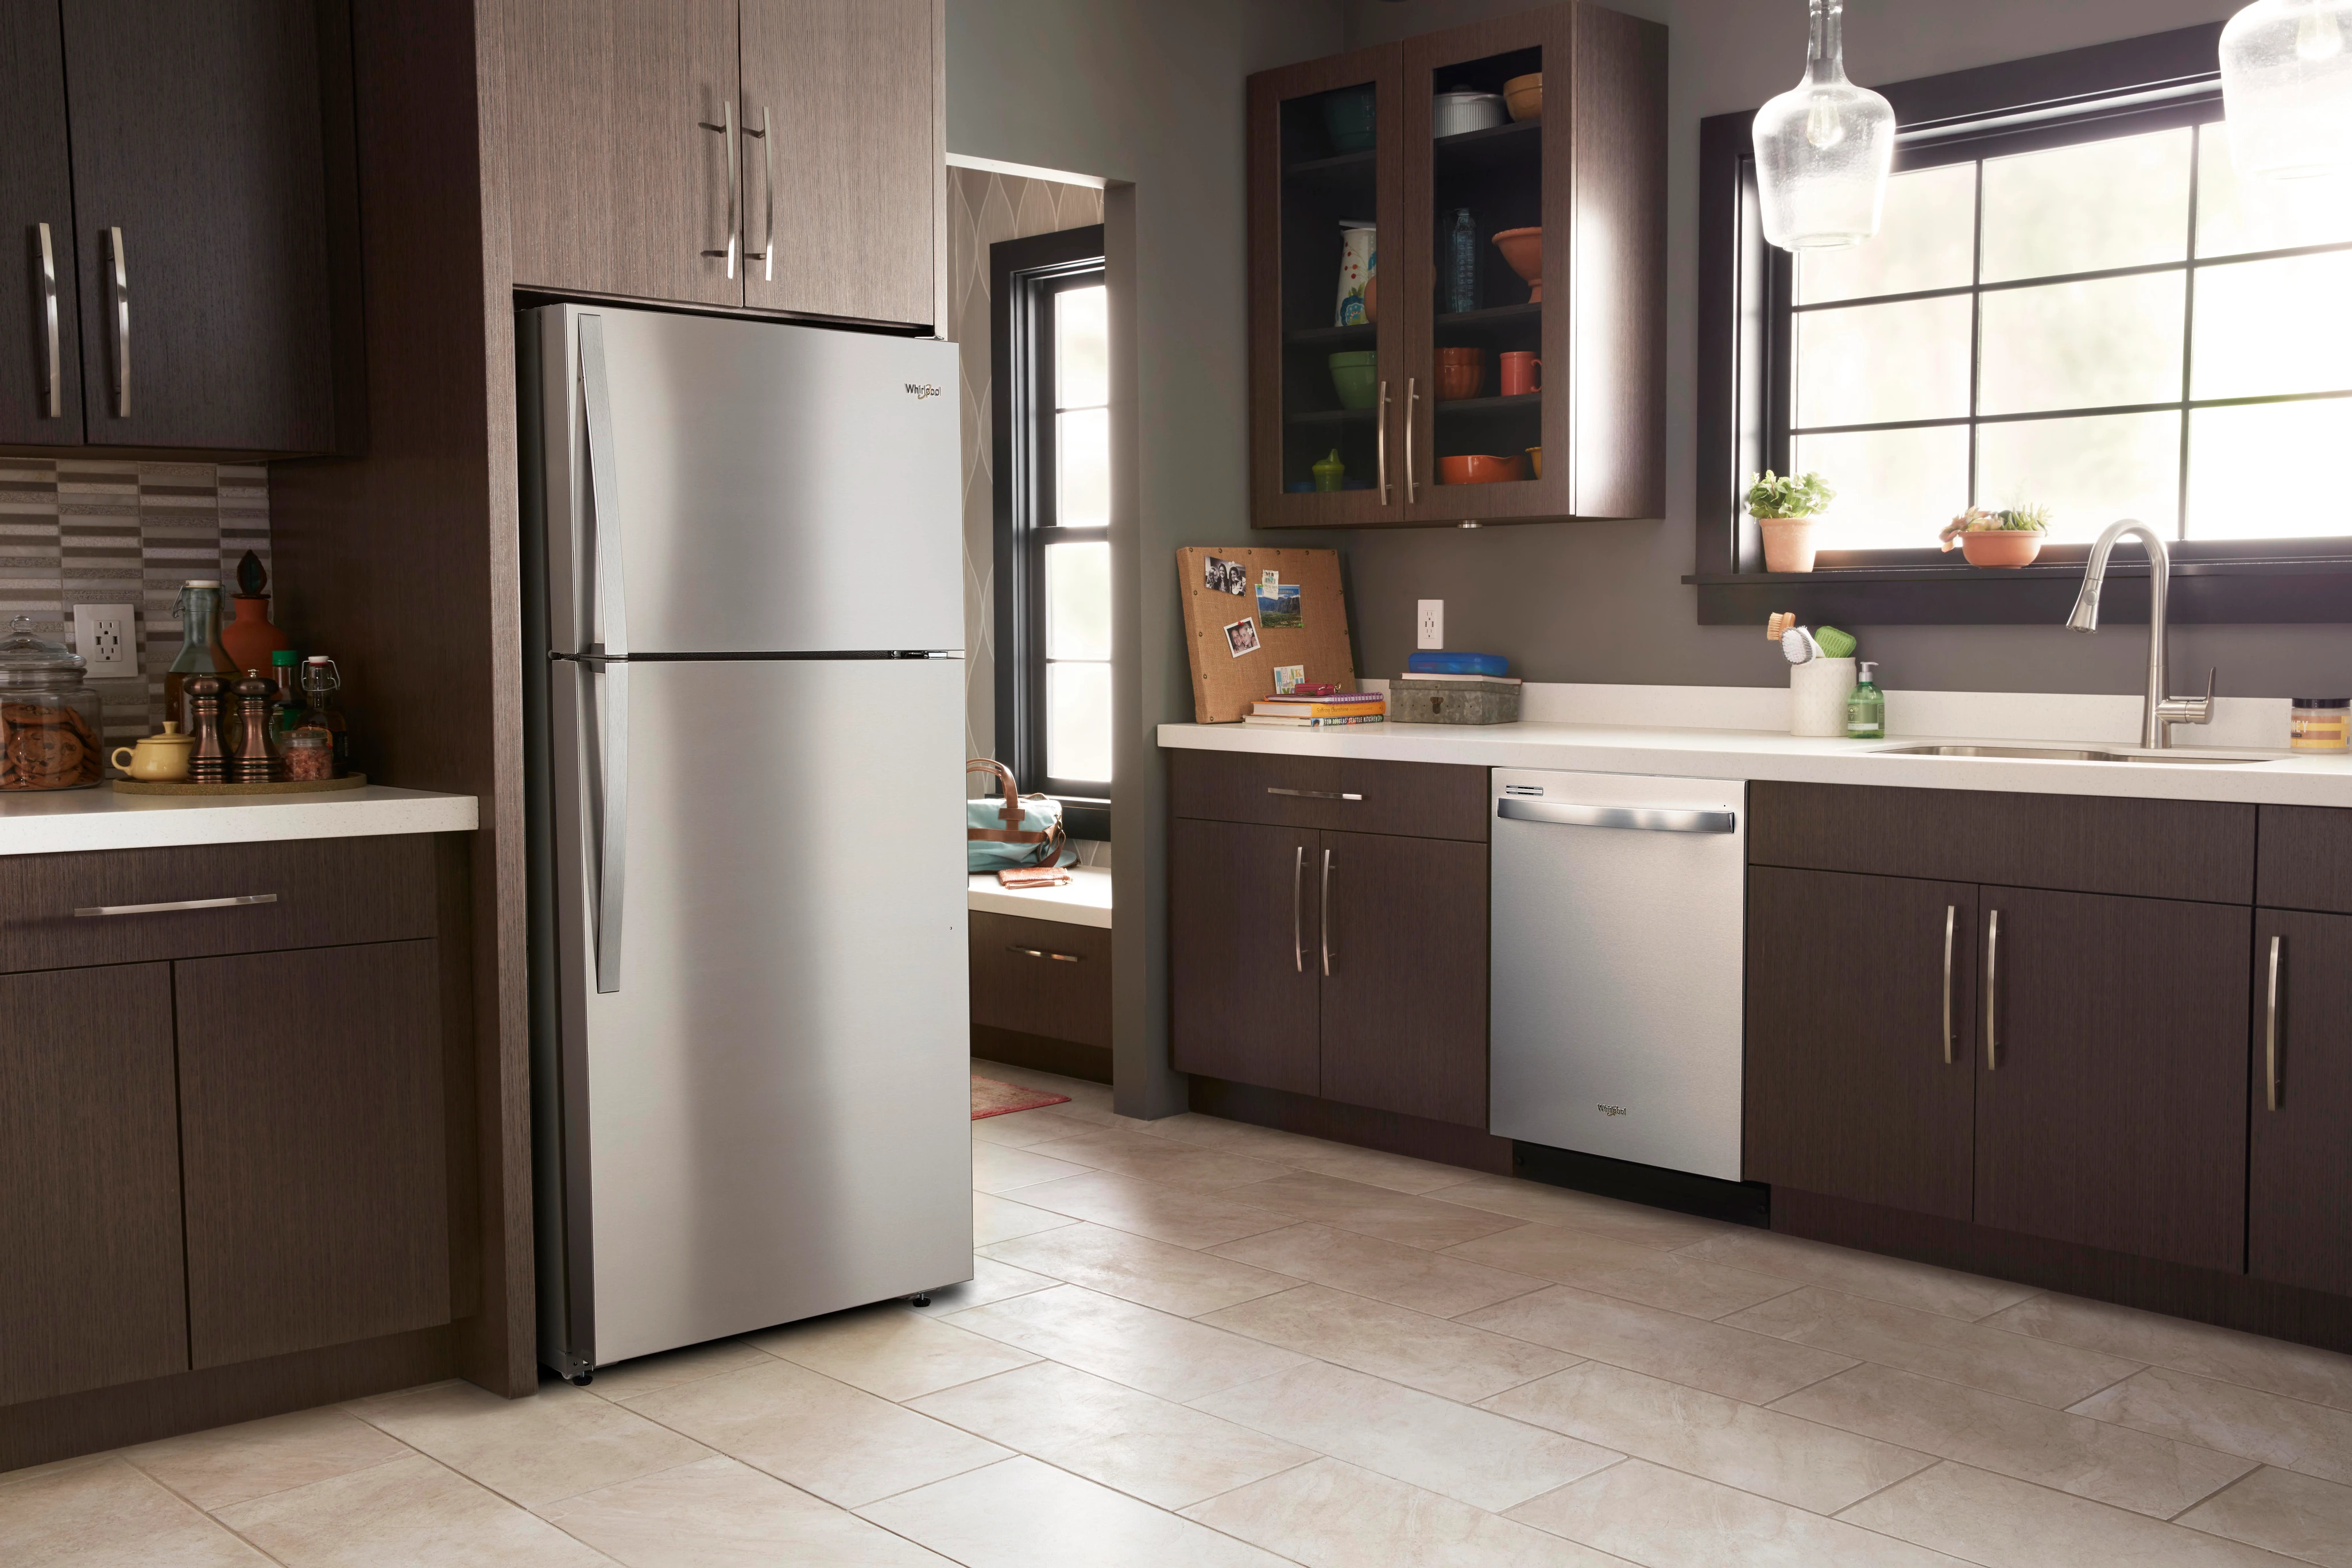 What Is Standard Refrigerator Depth